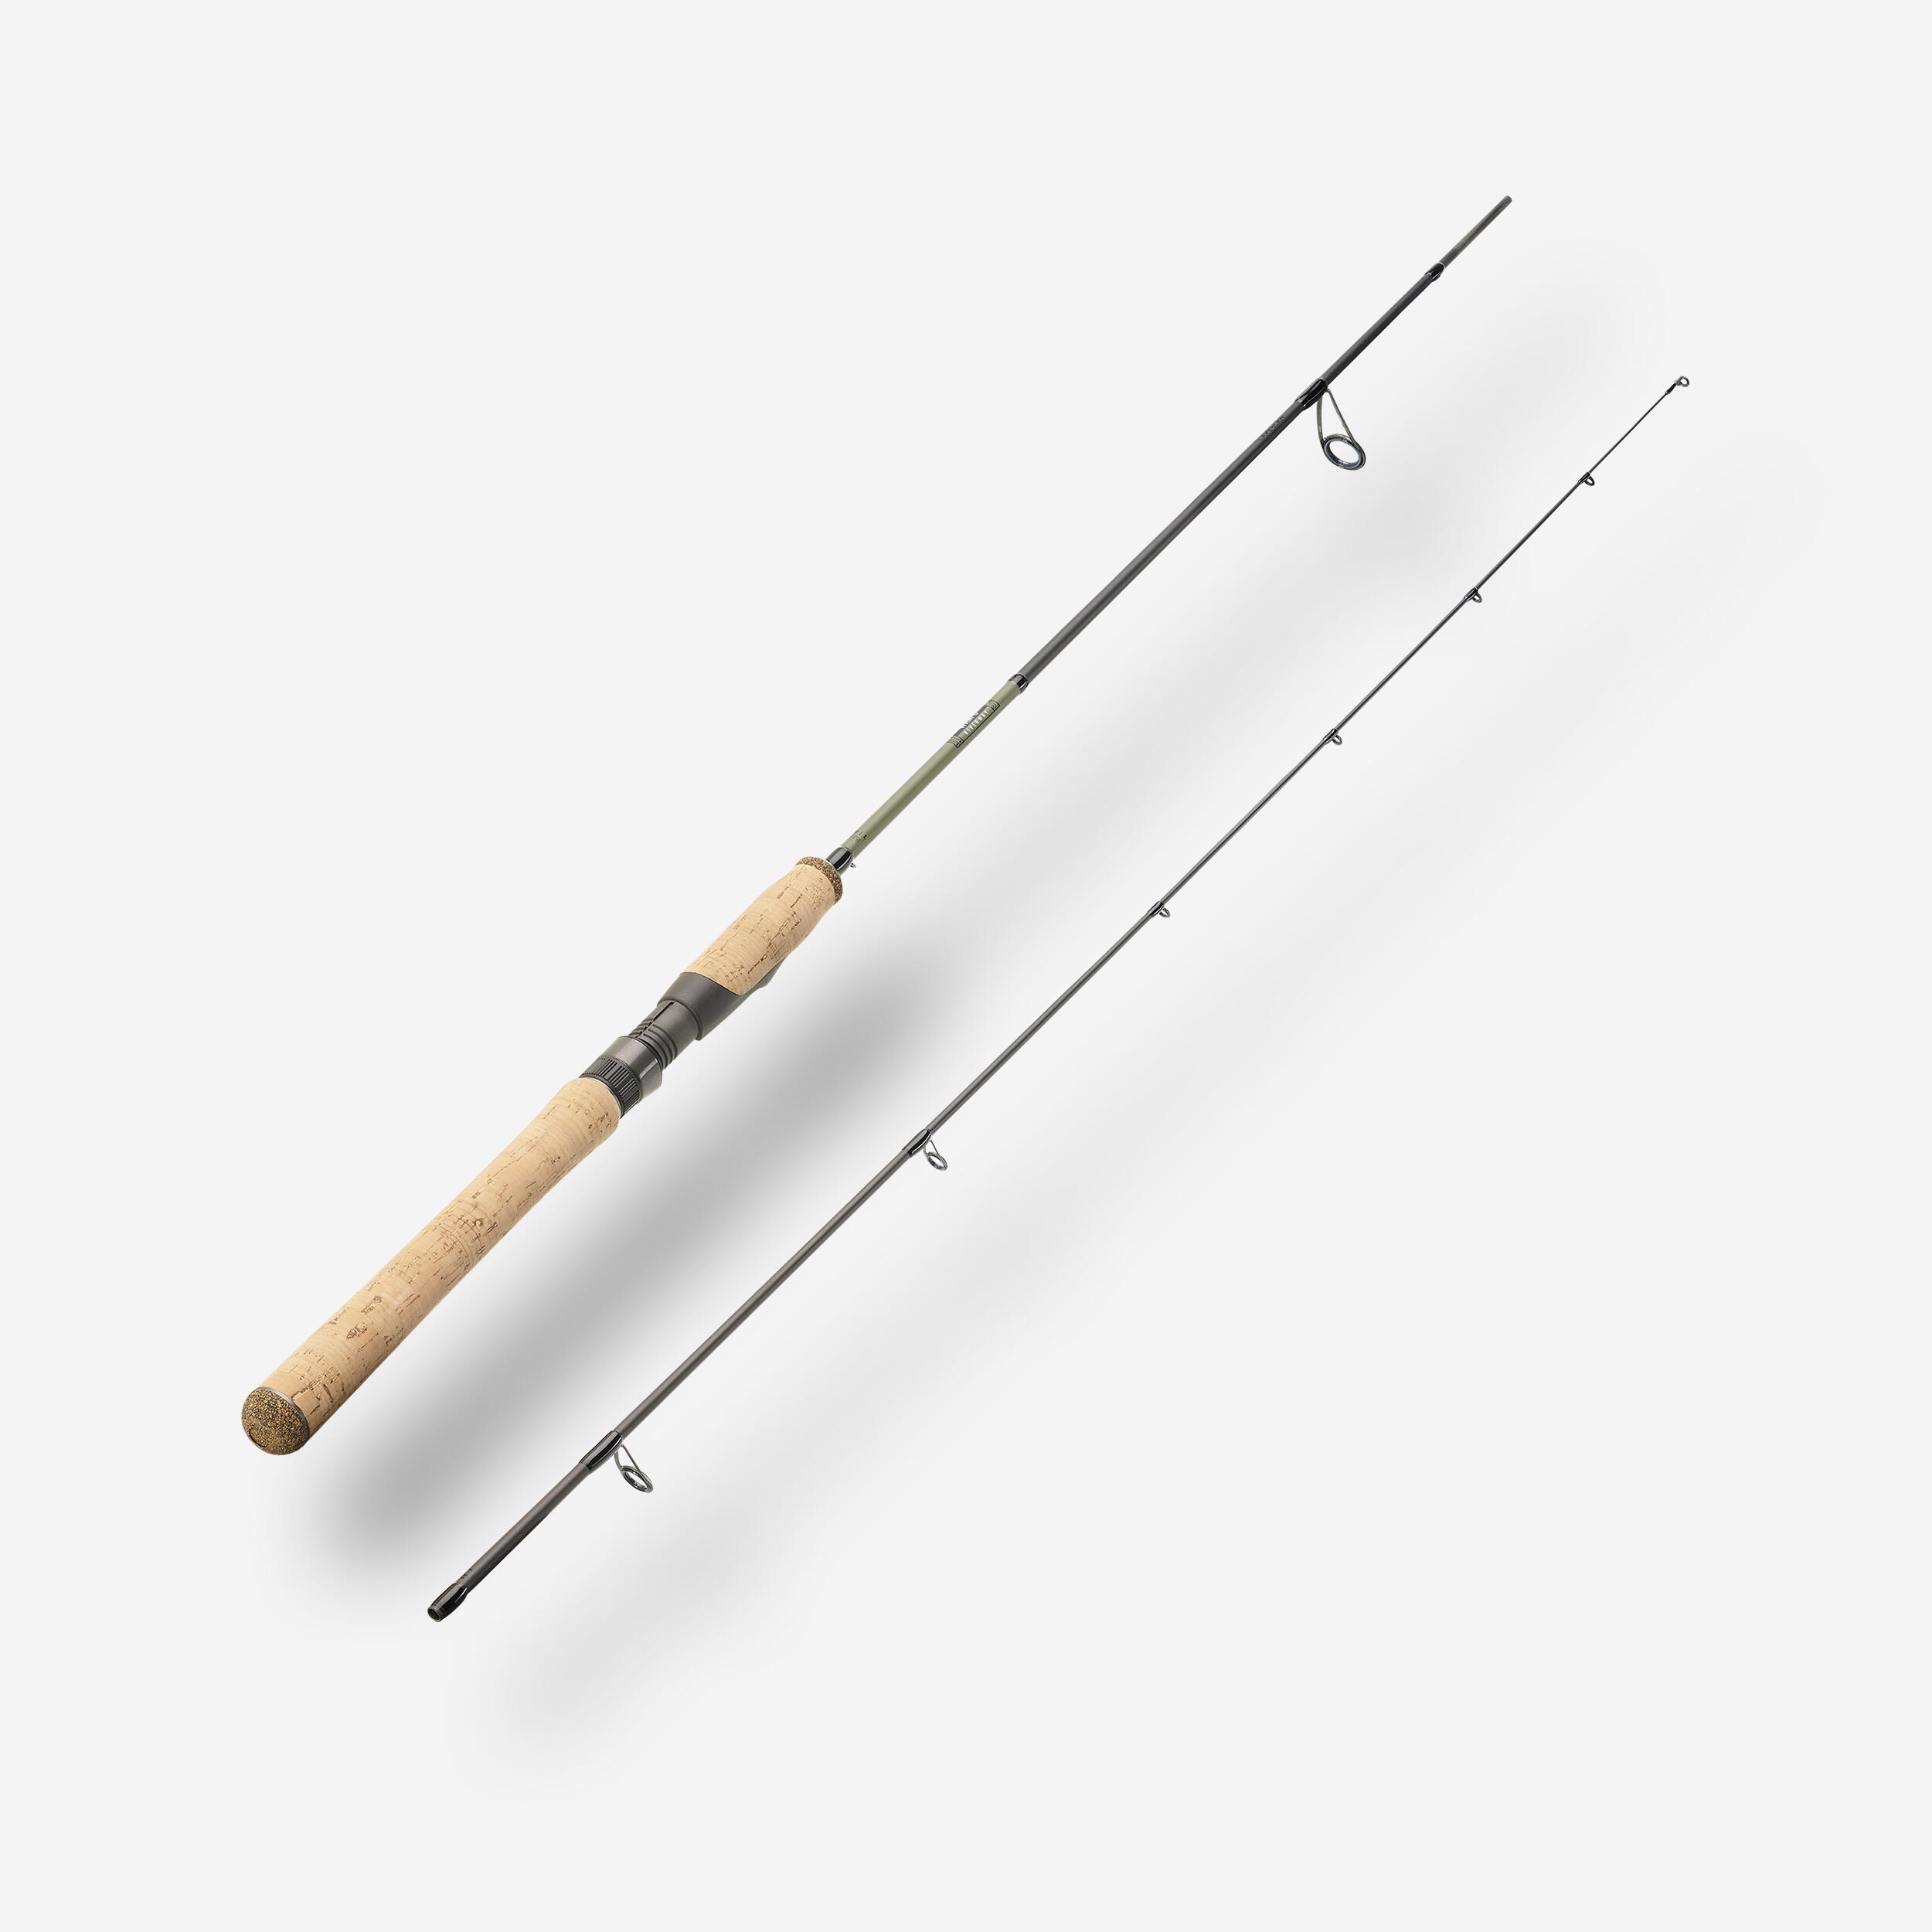 Resifight 100 fishing reed/rod combo